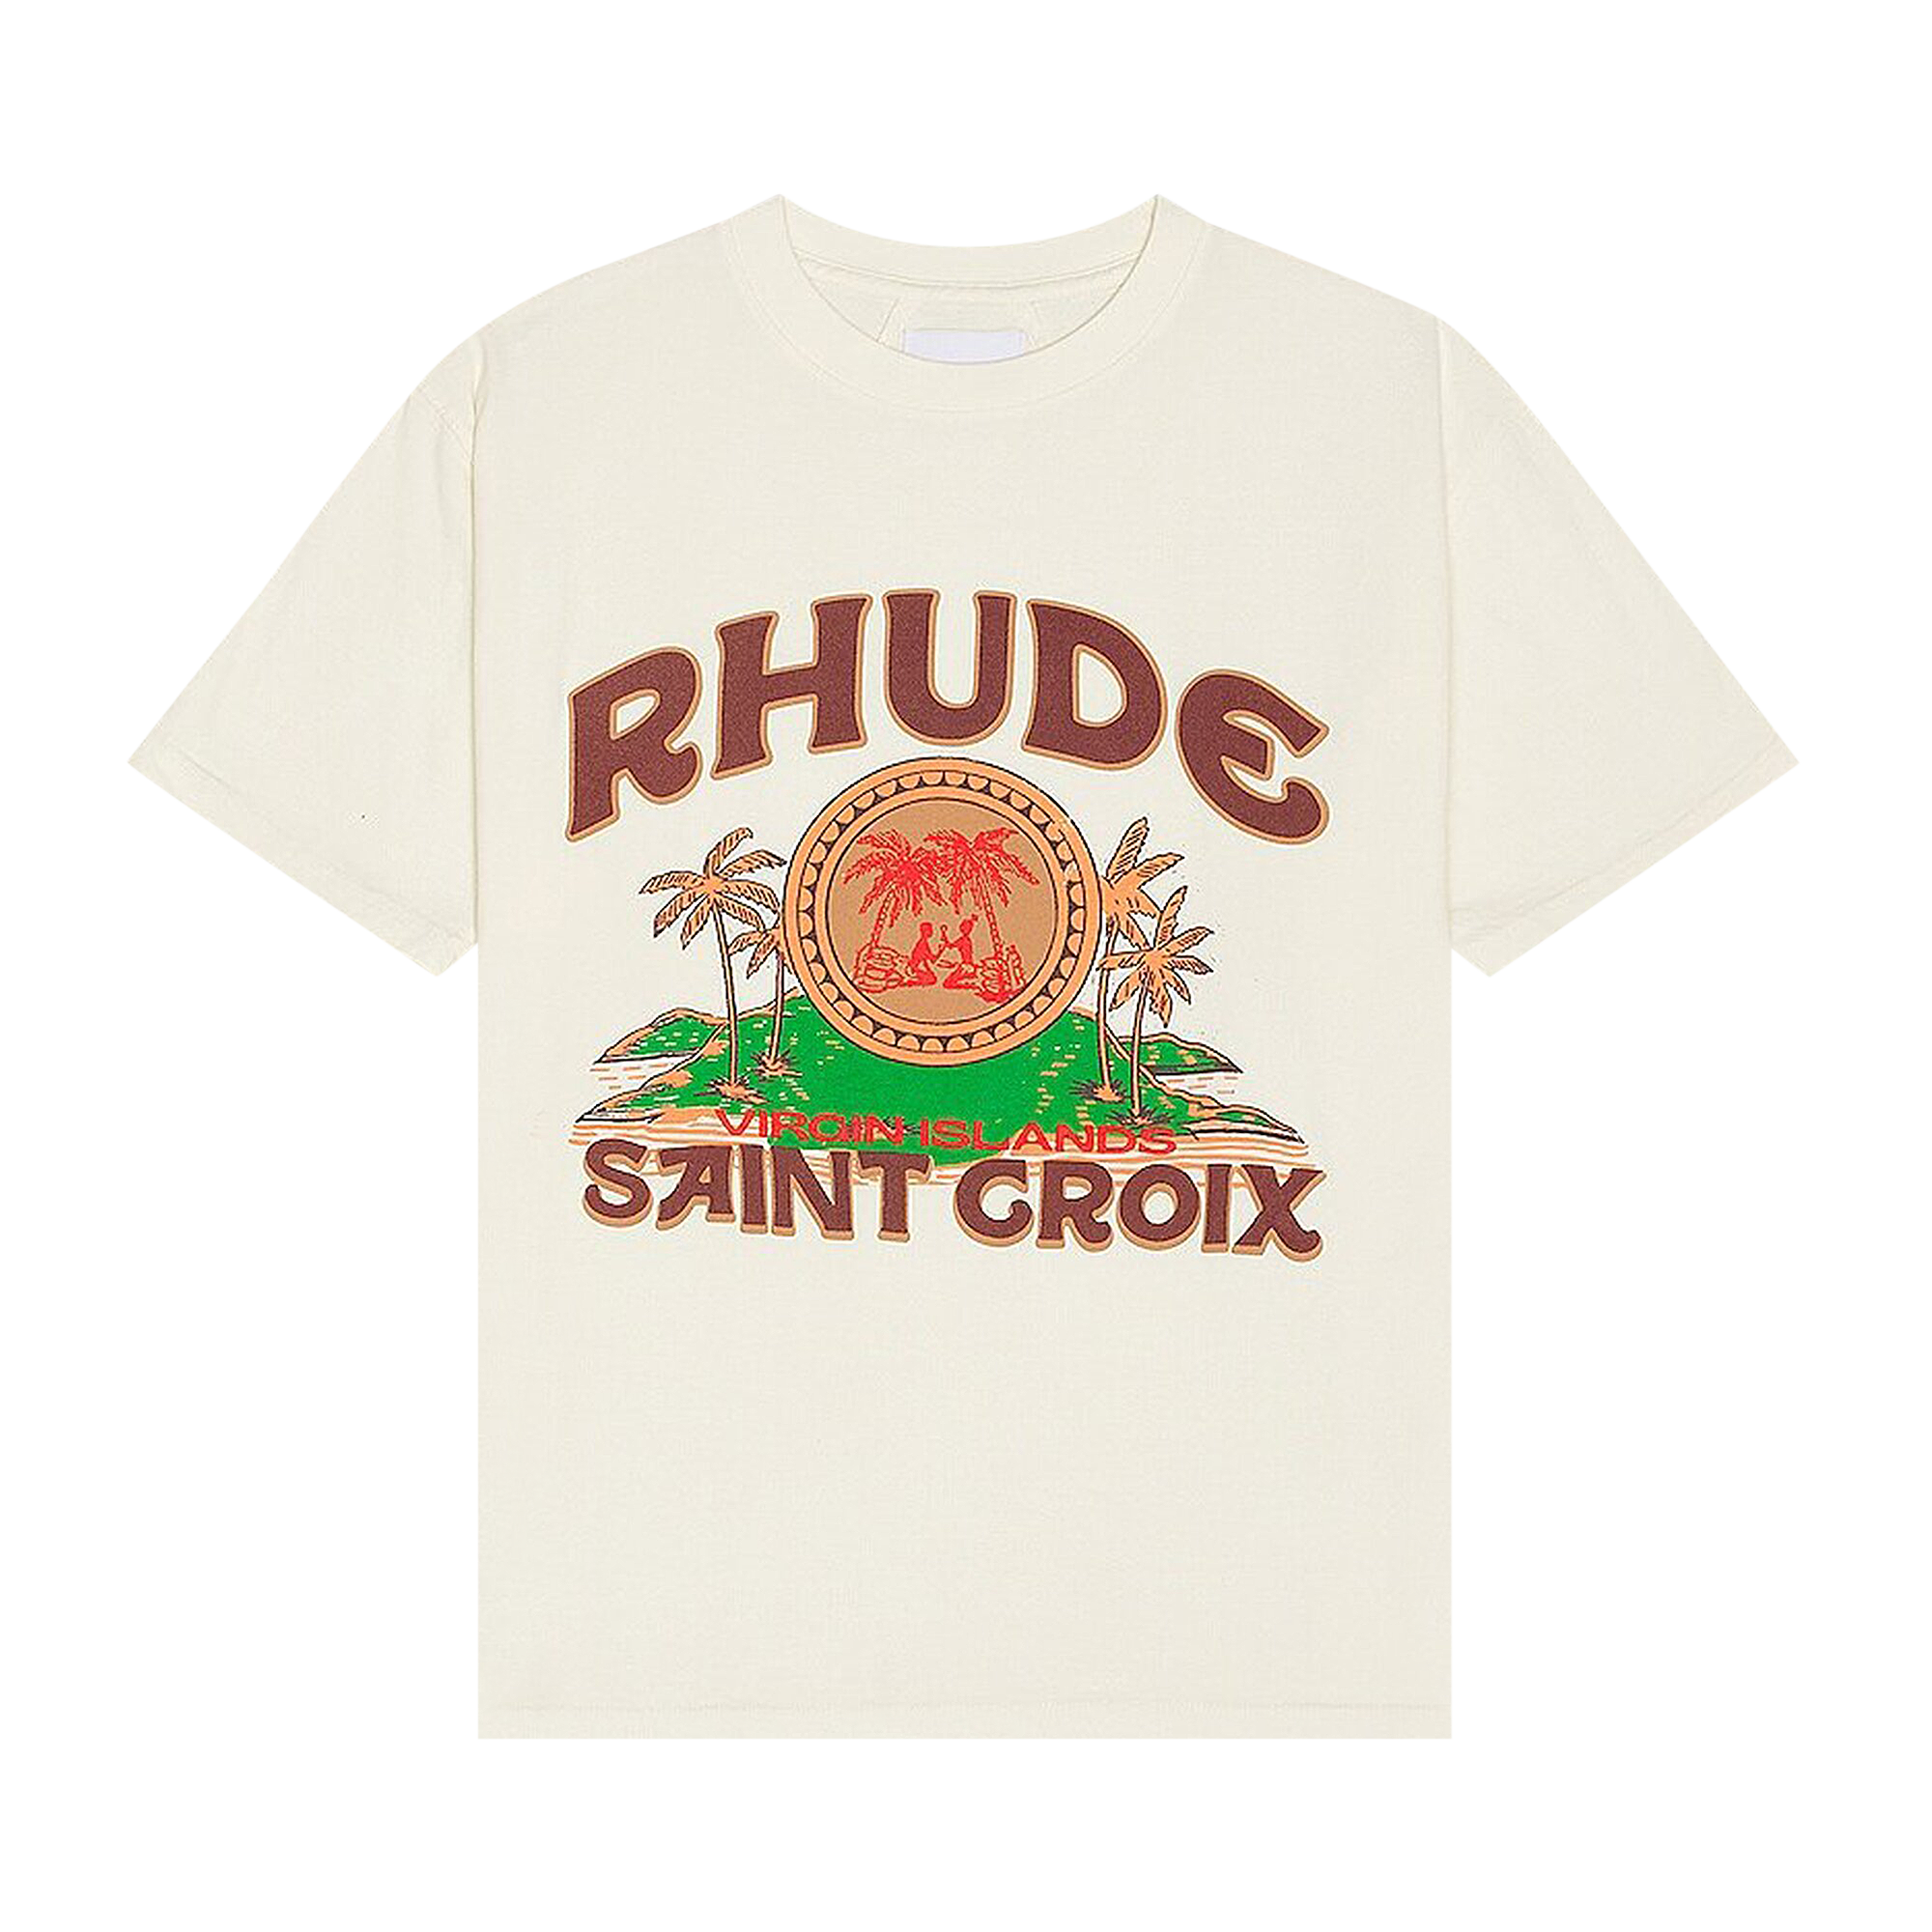 Rhude Off-White Cresta Cigar T-Shirt